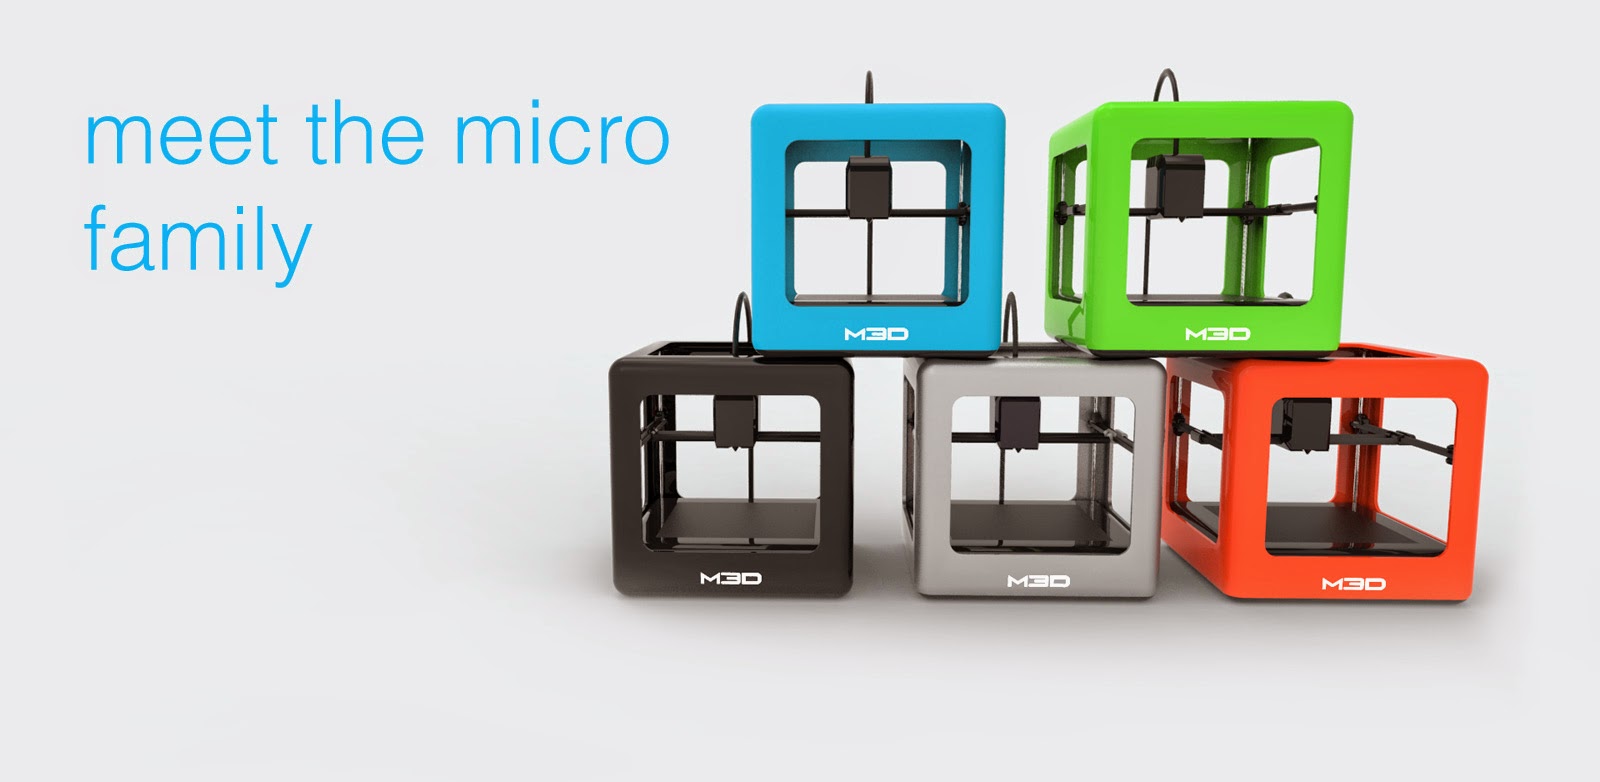 06-M3D-Michael-Armani-David-Jones-Micro-3D-Printer-www-designstack-co